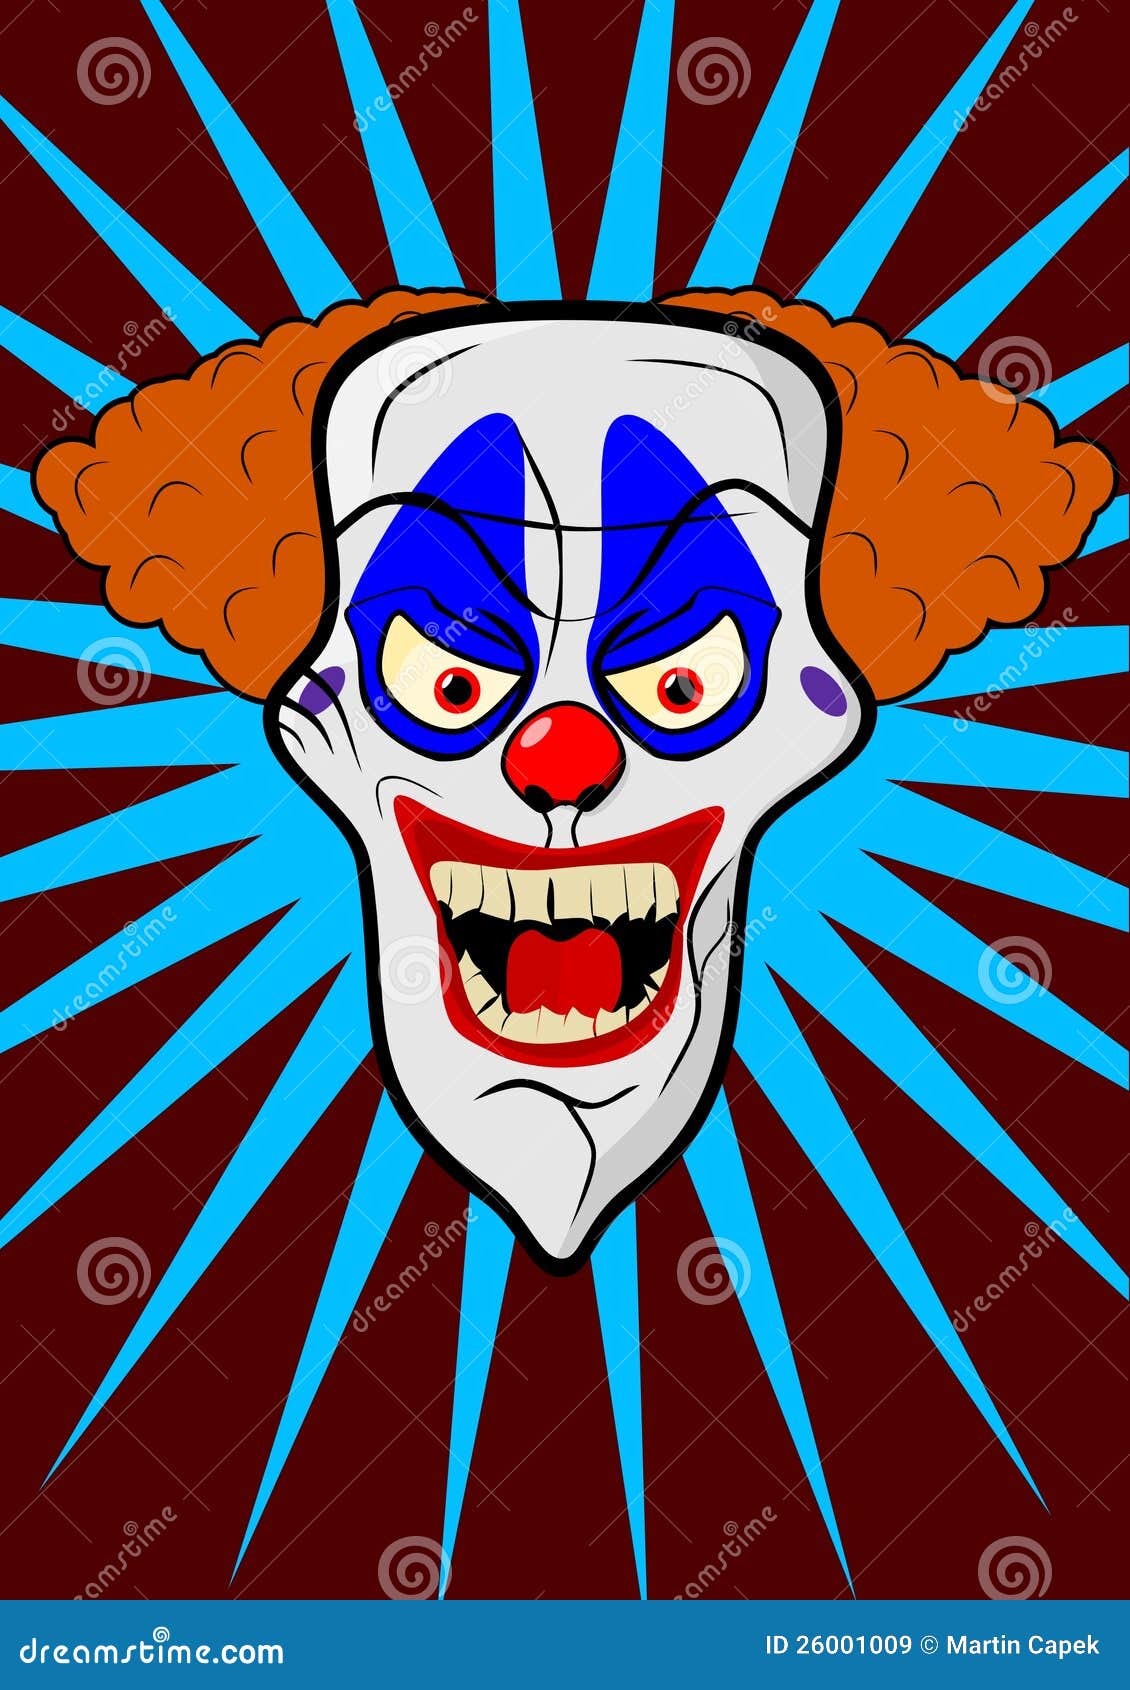 clipart crazy clown - photo #48